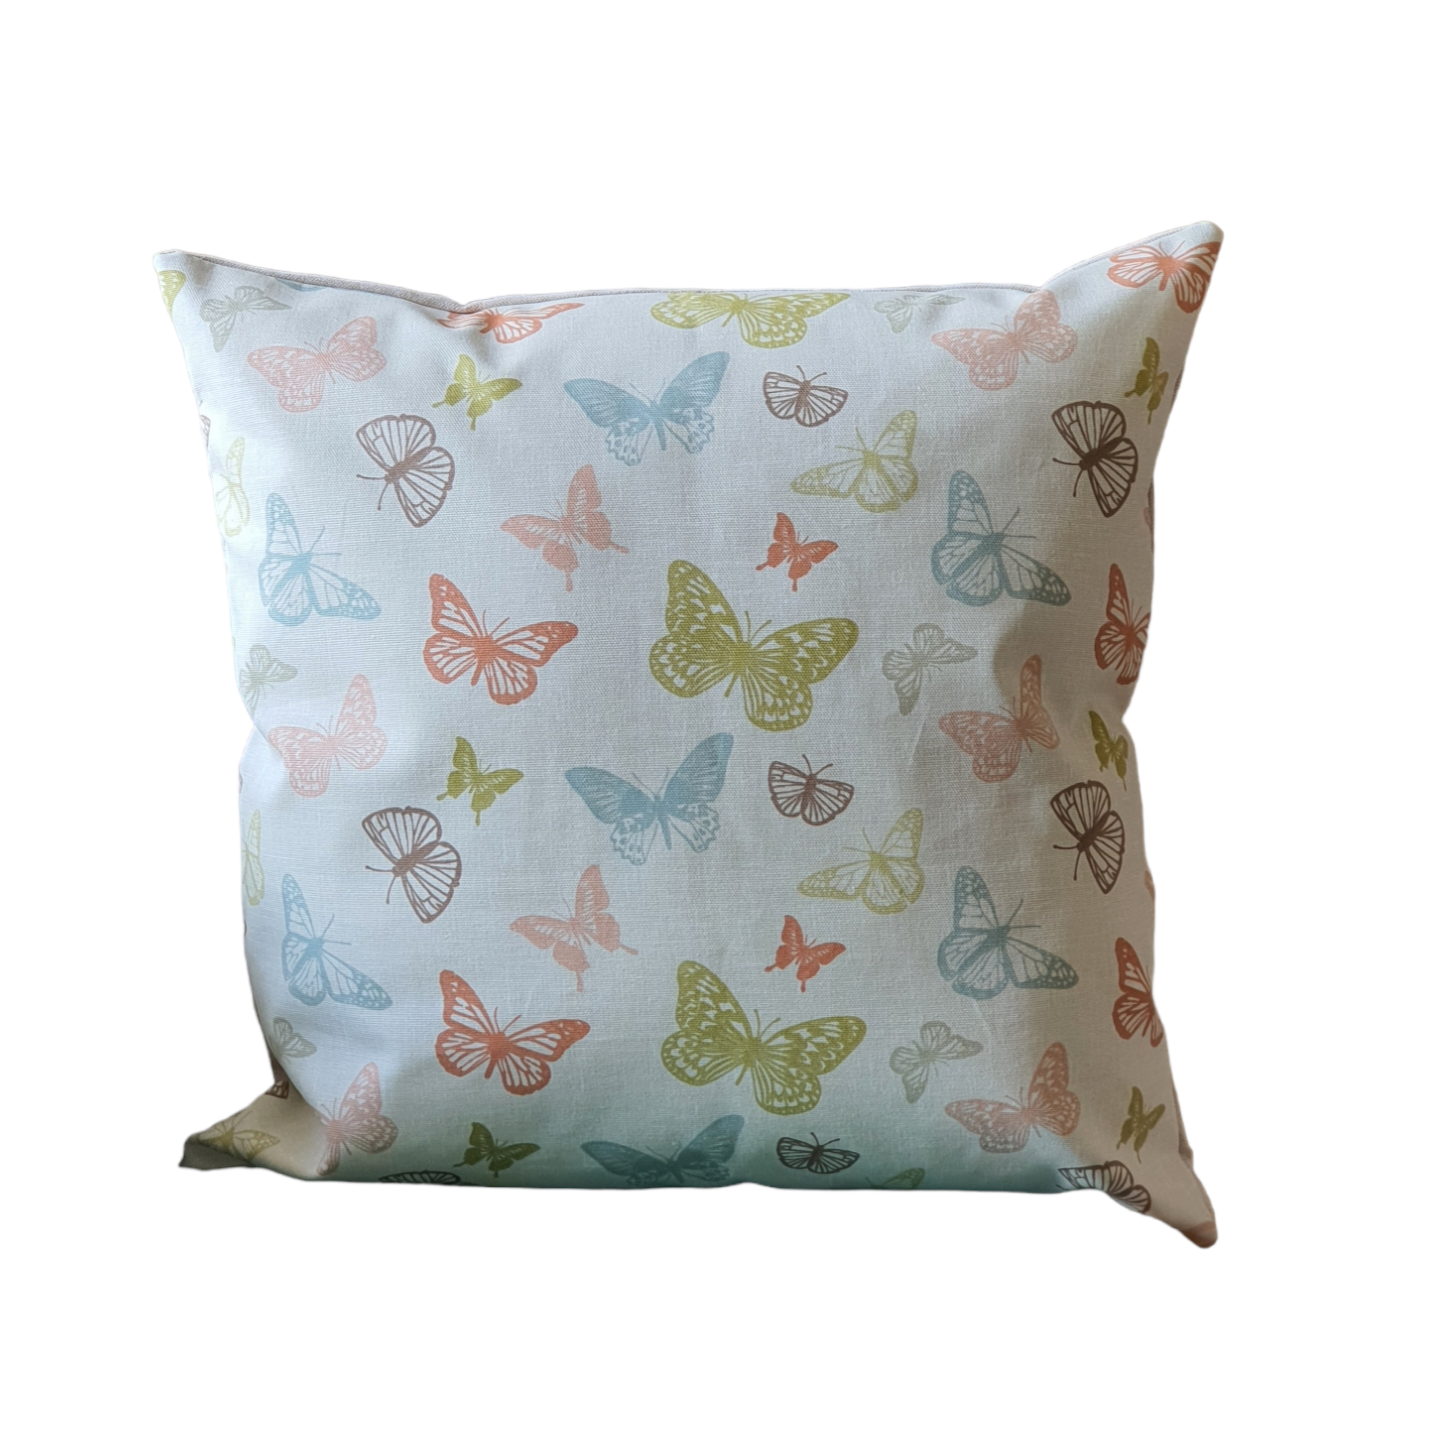 Pretty Pastel Butterflies - Handmade Zipped Cushion Cover